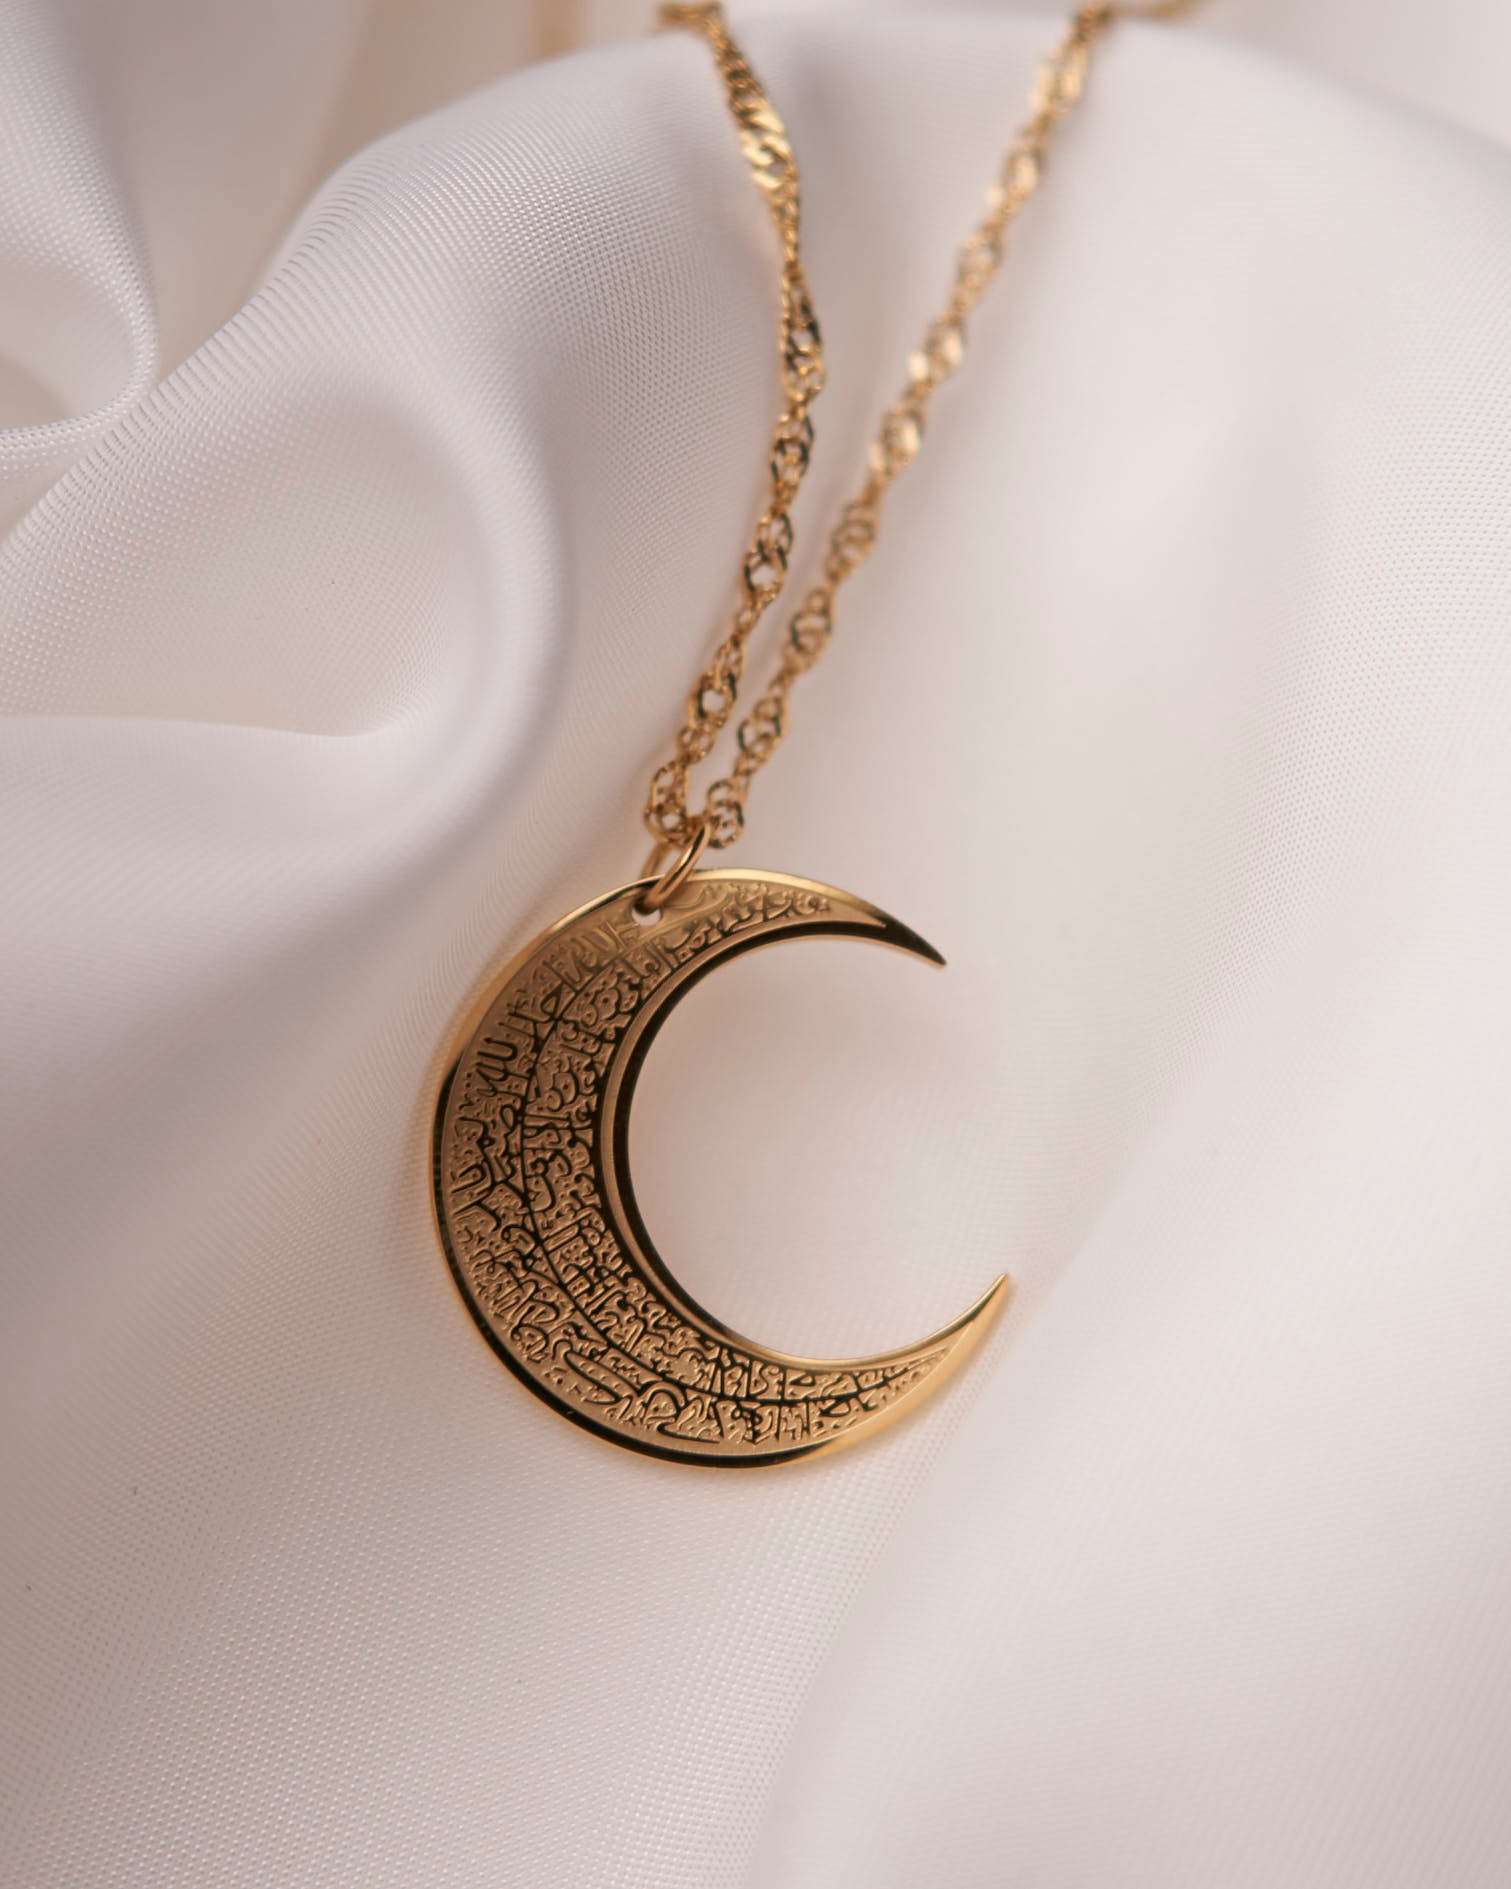 4 Qul Crescent Moon Necklace - Necklace - Fajr Noor